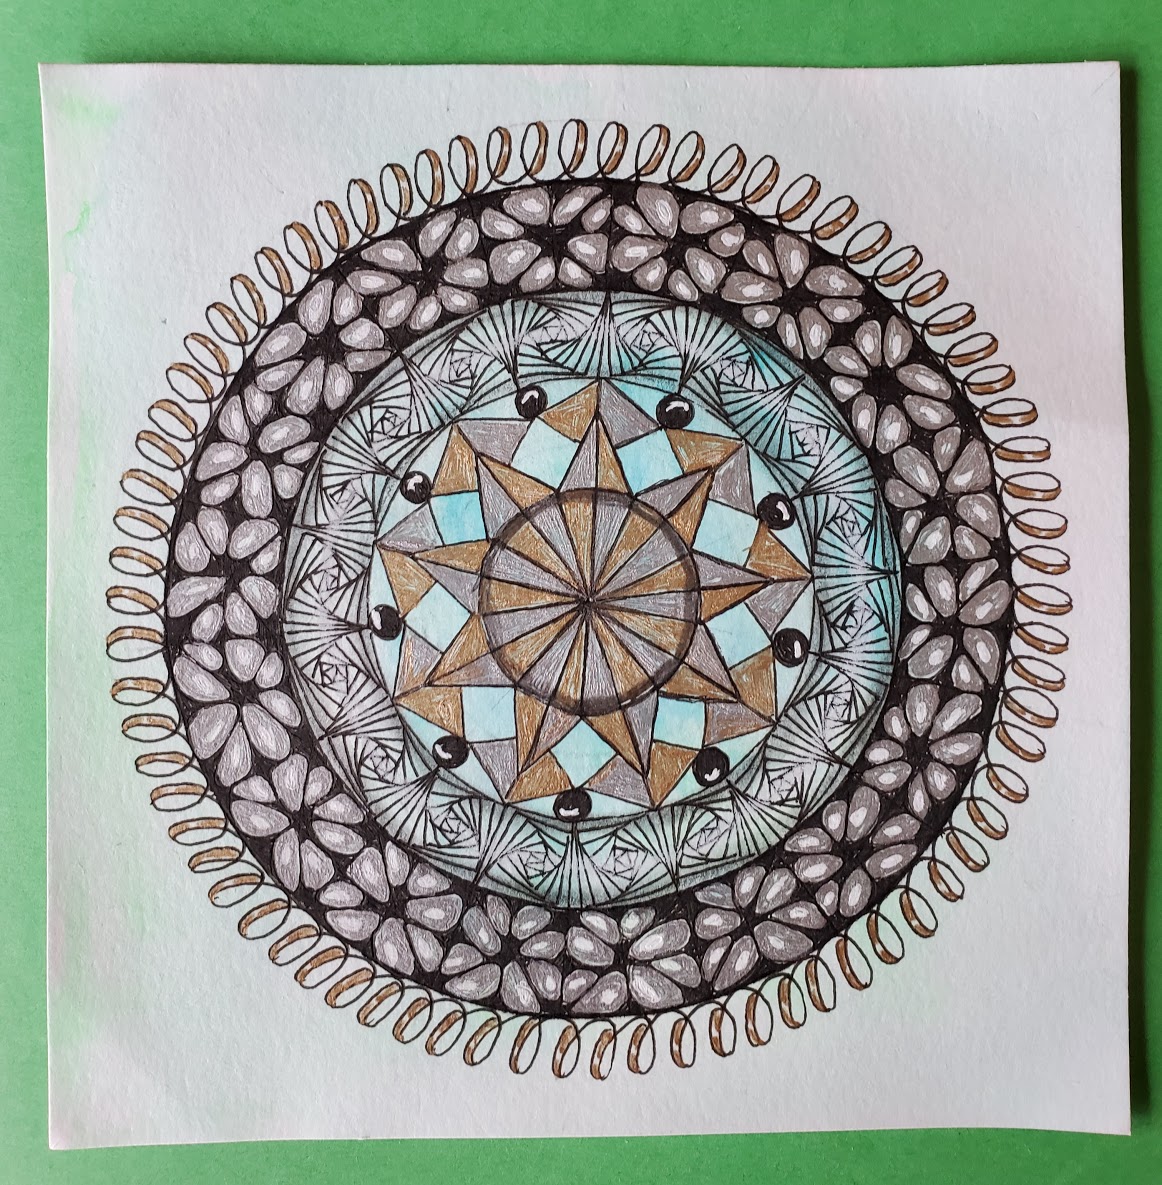 Zendala, Mandala with Slinky as a border tangle